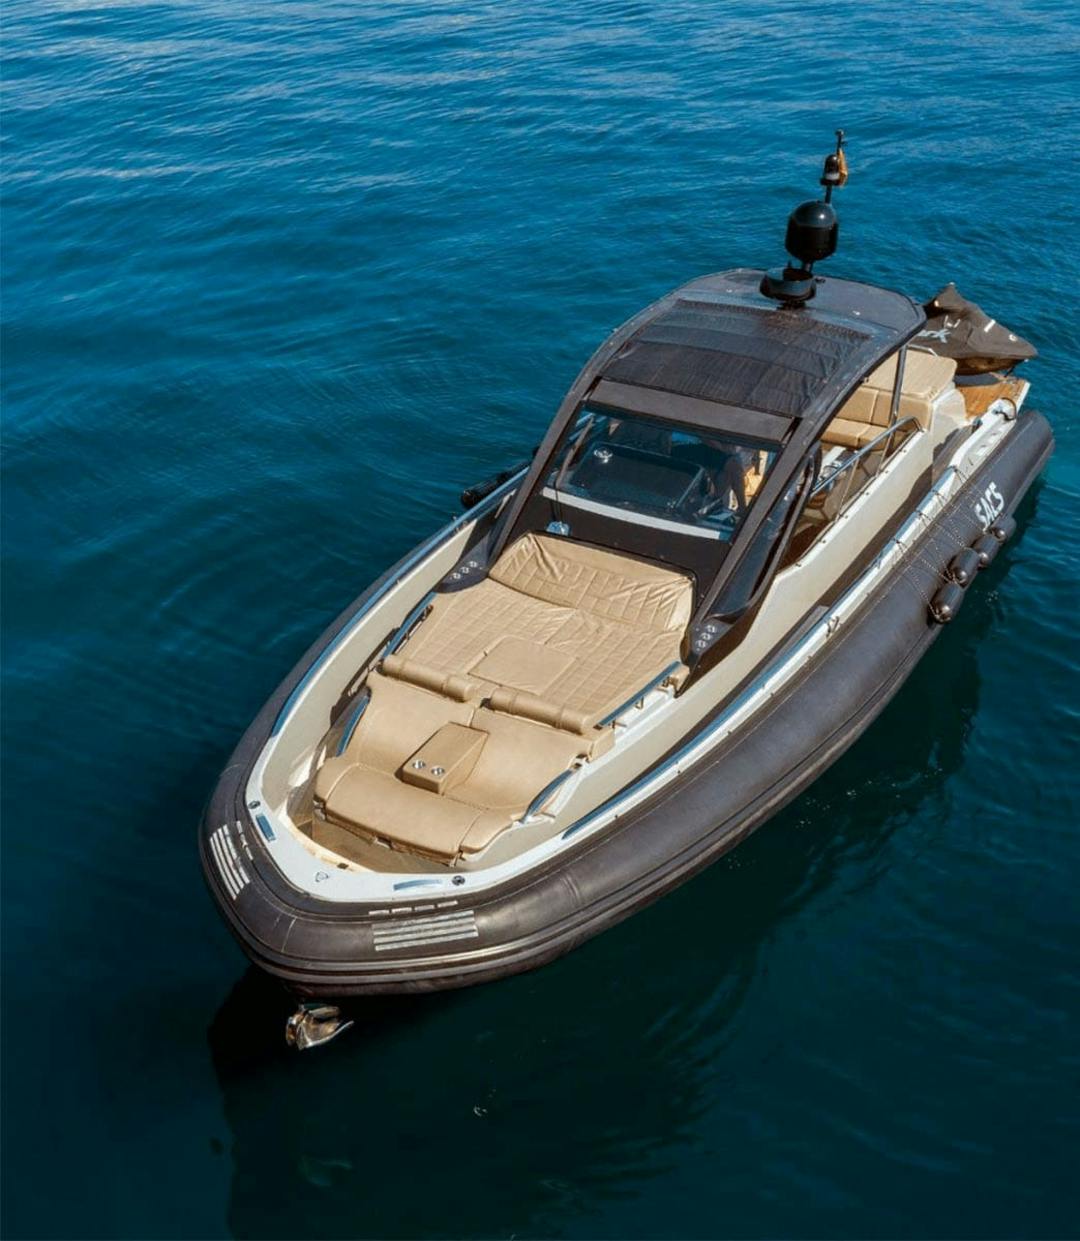 47 Sacs luxury charter yacht - Porto Montenegro, Blaža Jovanovića, Tivat, Montenegro